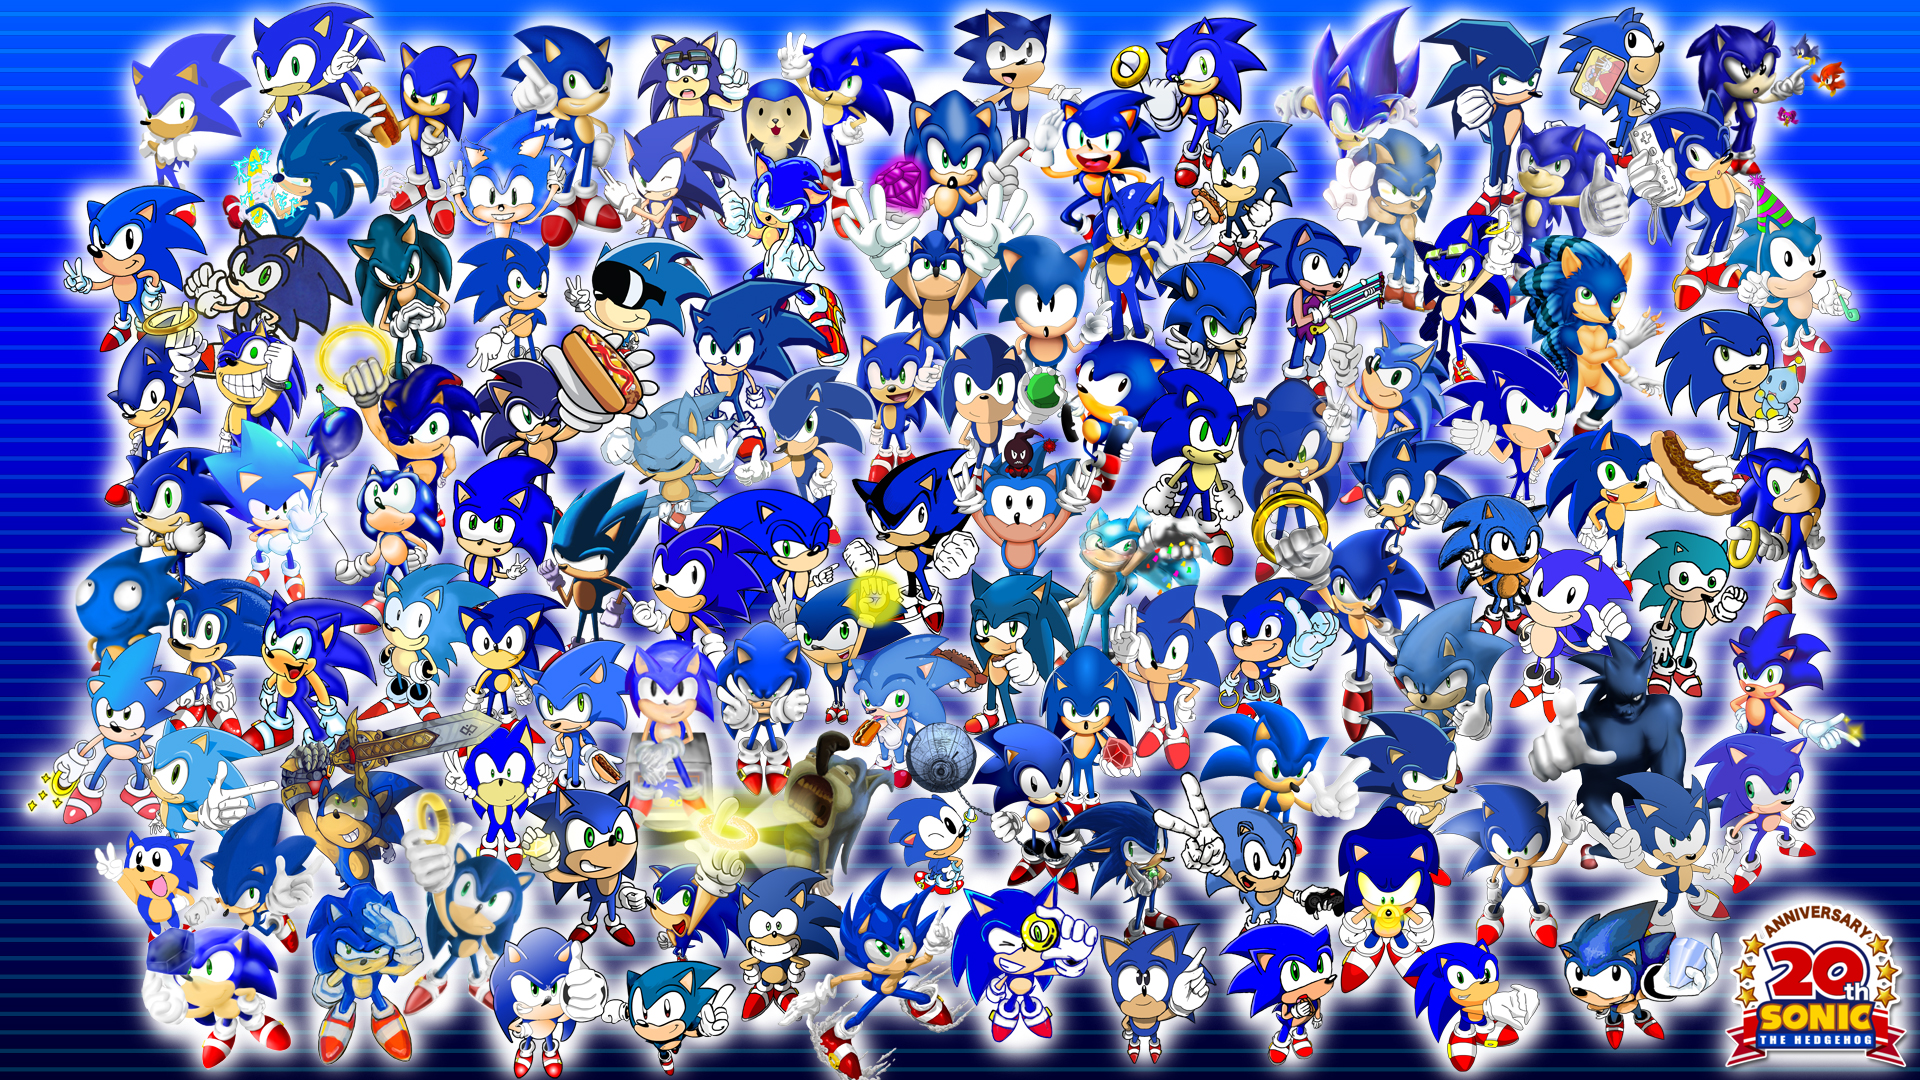 48+ Sonic Wallpaper for Desktop on WallpaperSafari